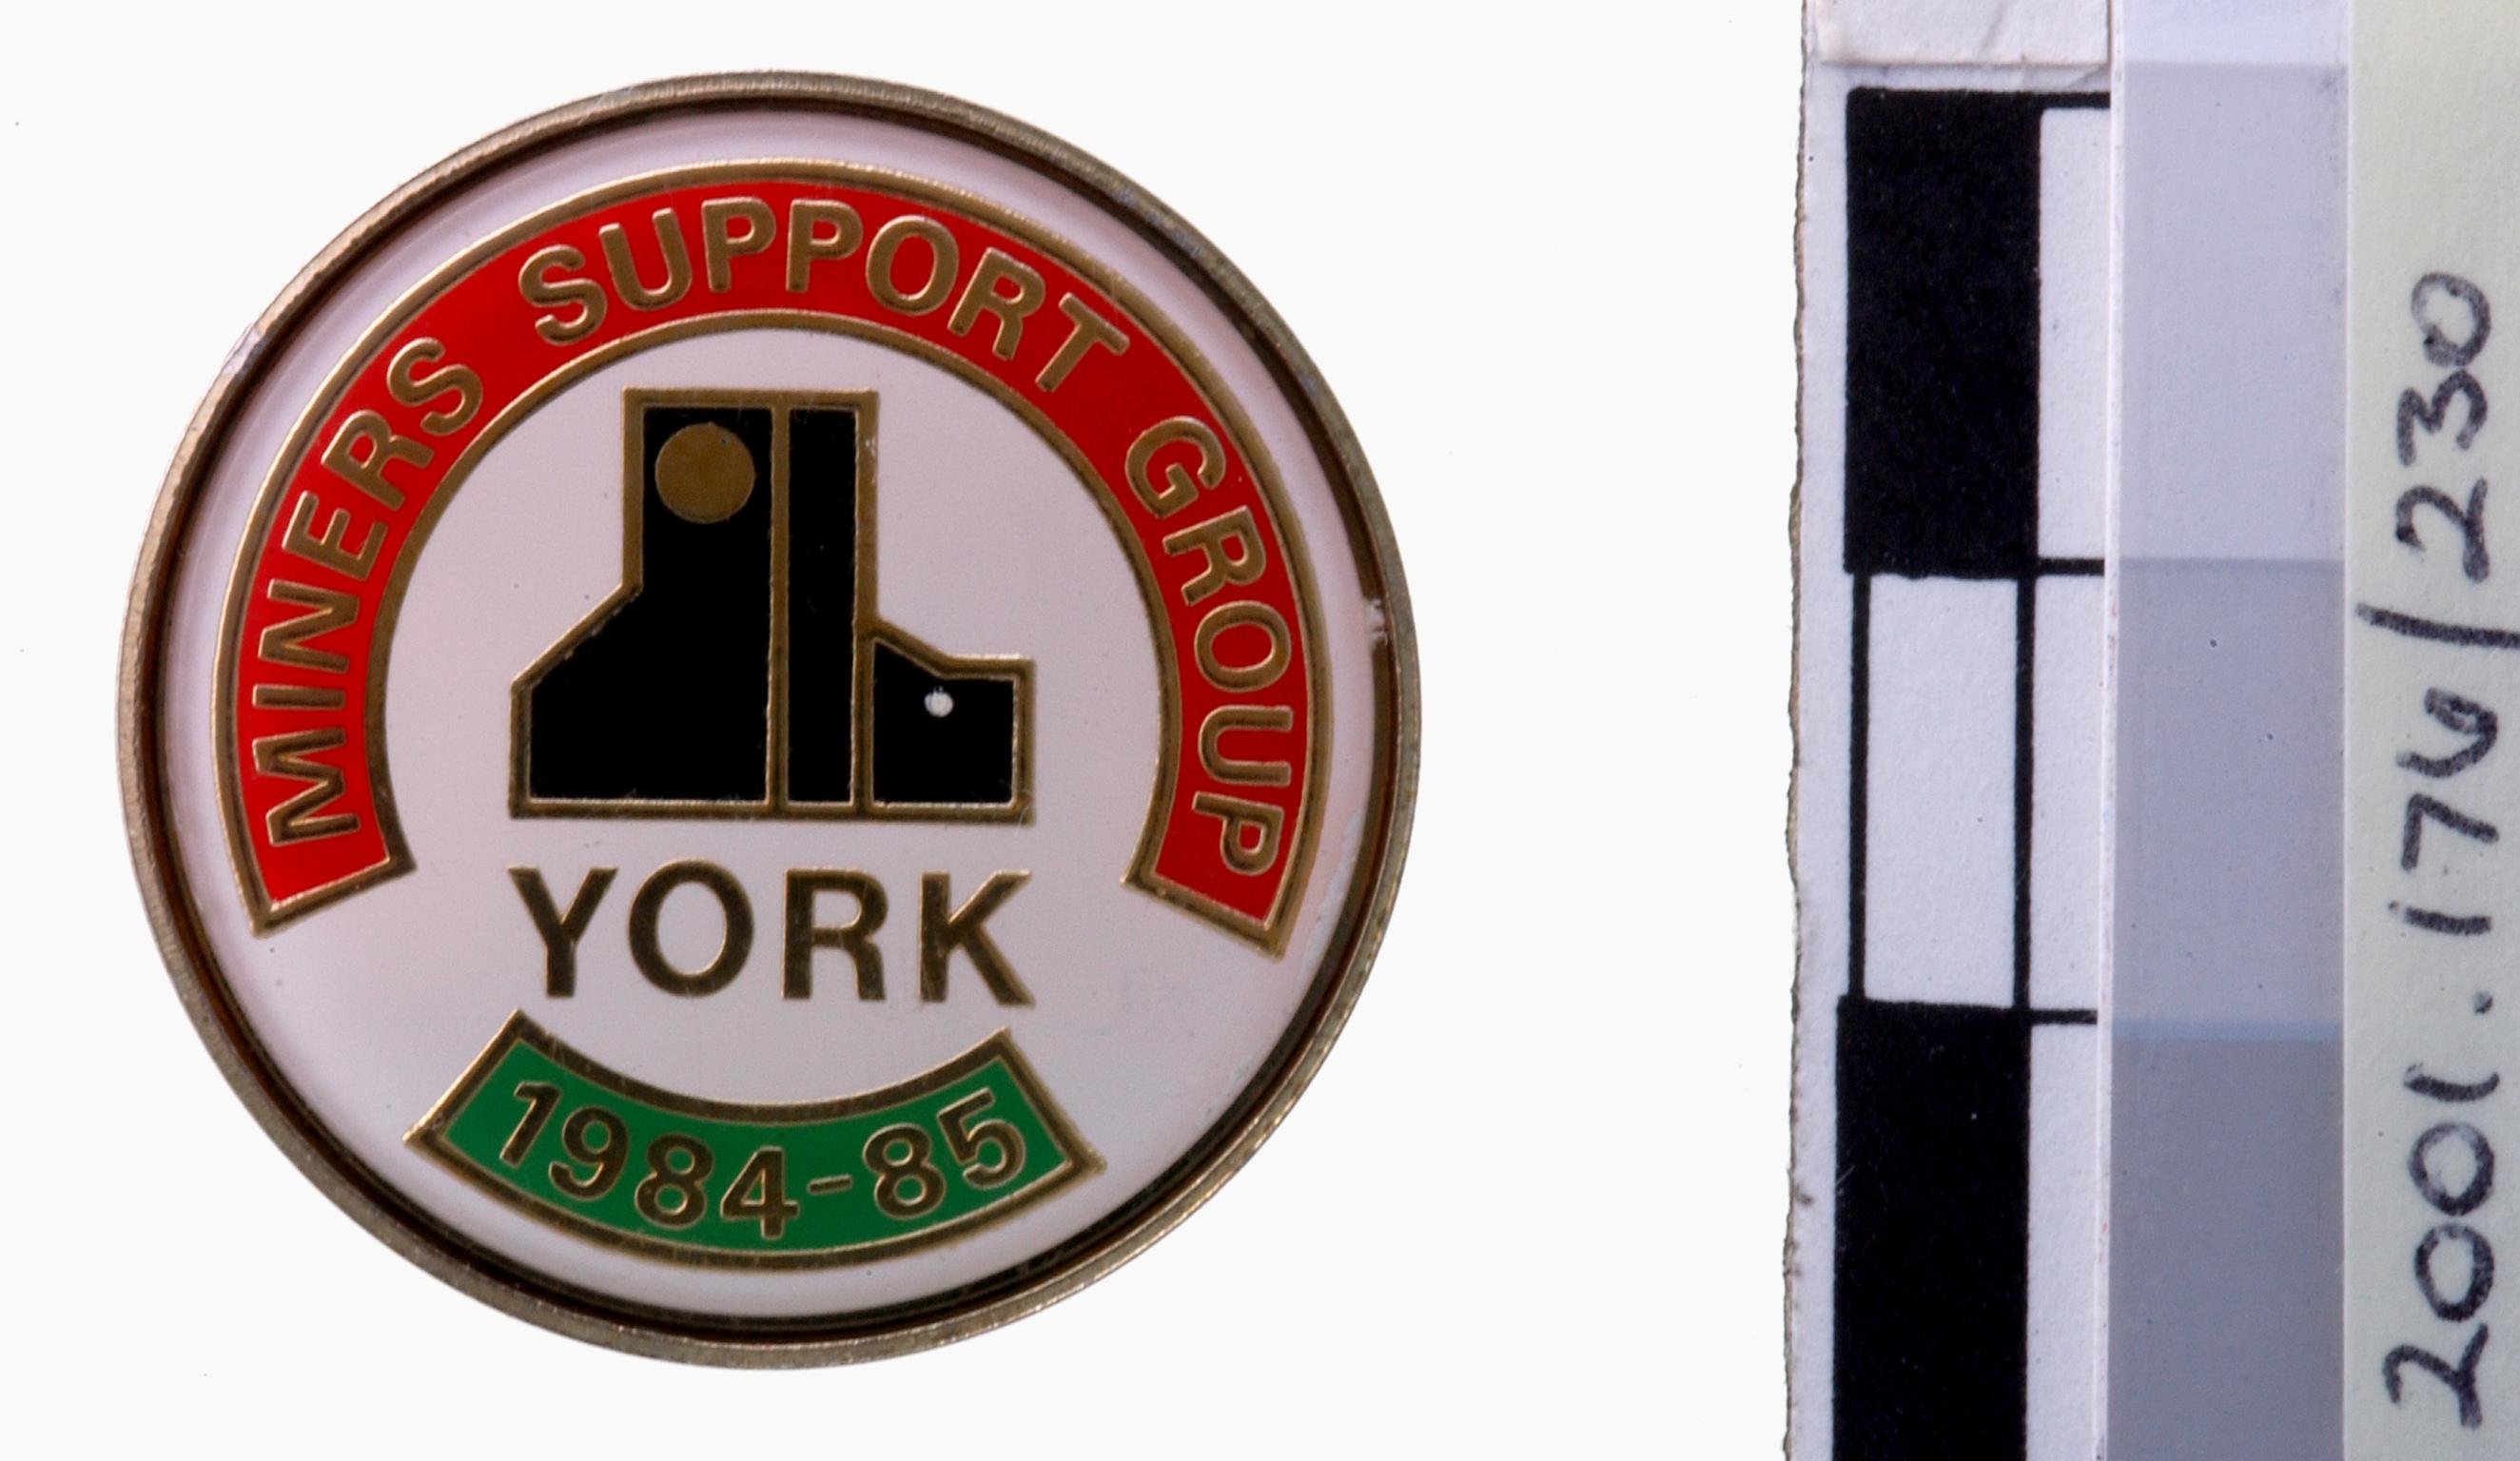 N.U.M. Yorks support group, badge